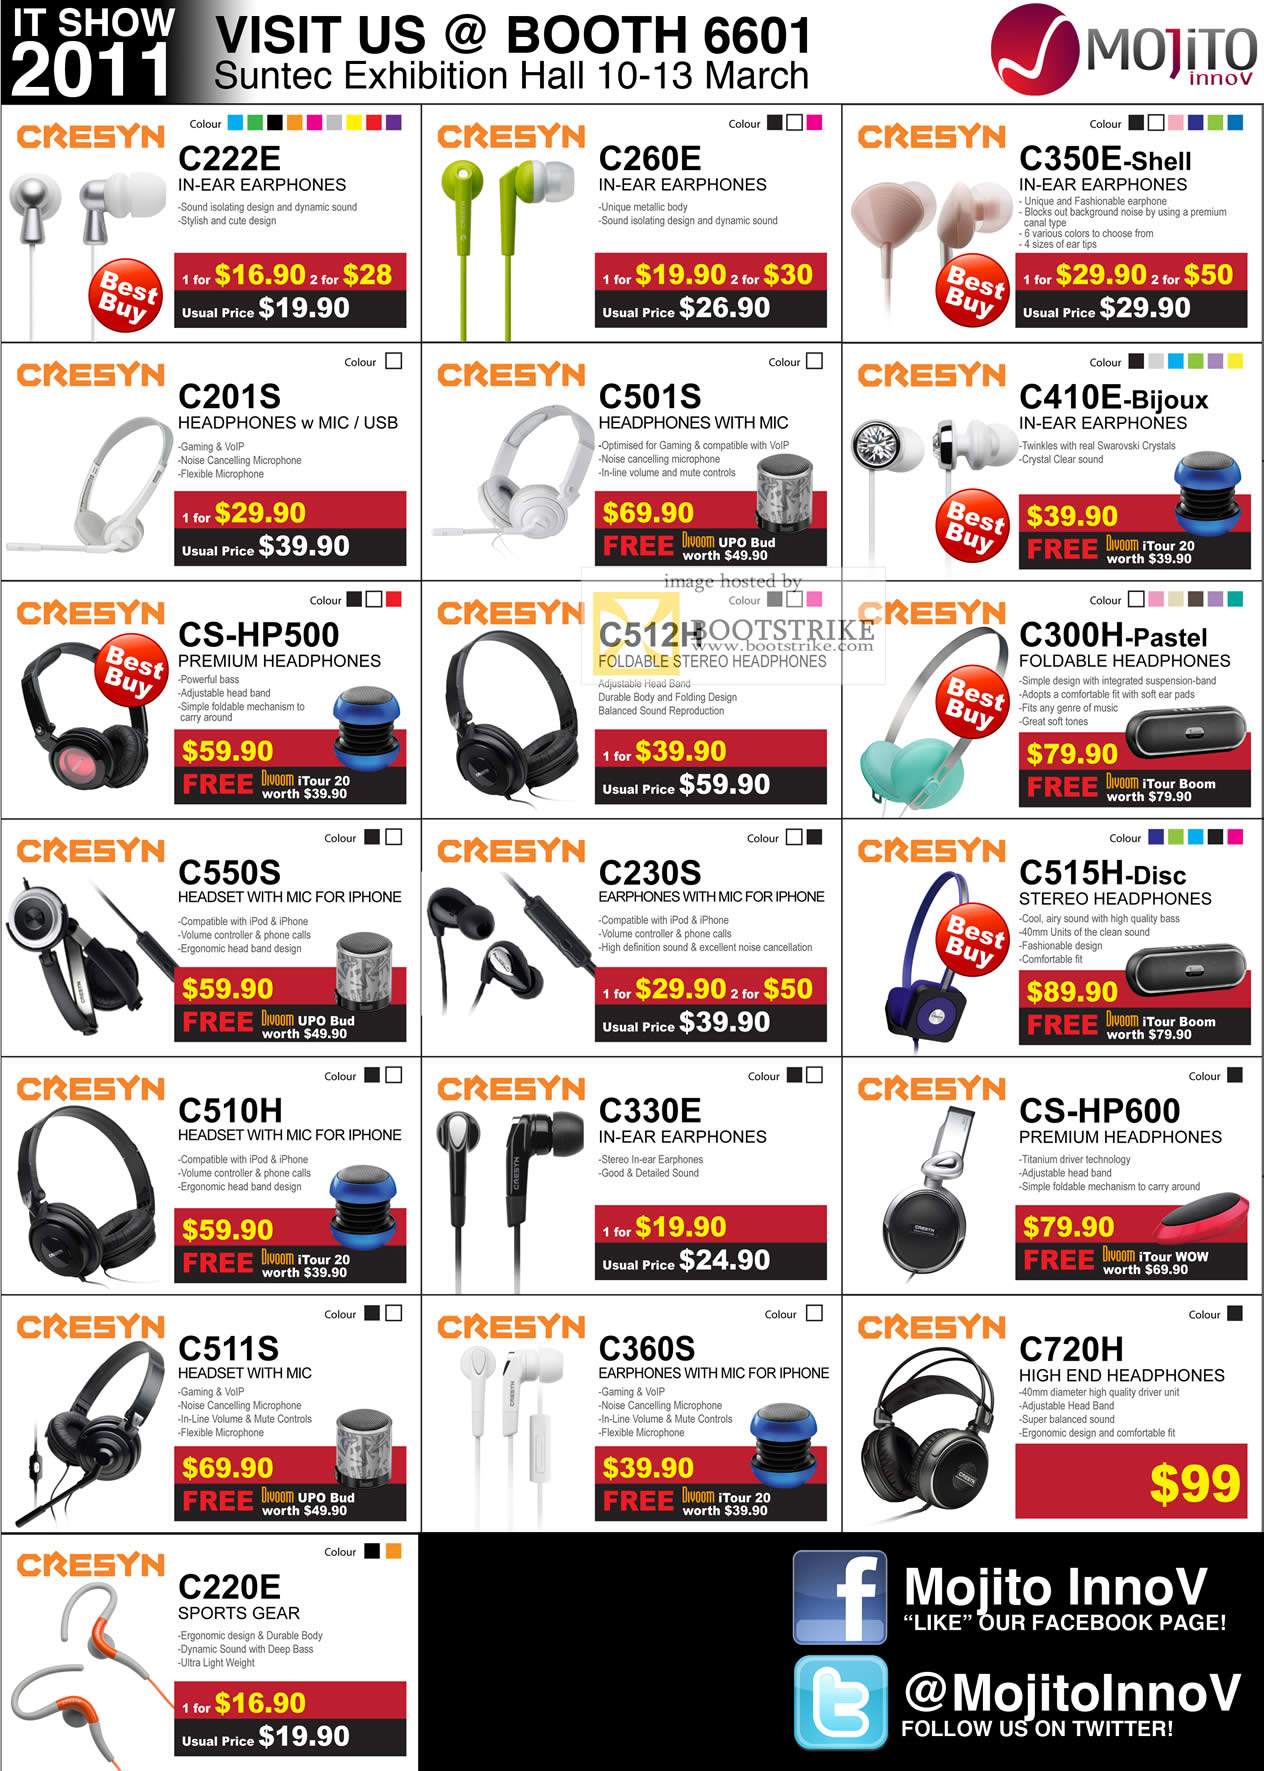 IT Show 2011 price list image brochure of Divoom Cresyn In-Ear Earphones C223 C260E C350E Shell C501S C300H Pastel CS-HP500 C300H C515H Headset C510H C720H C220E